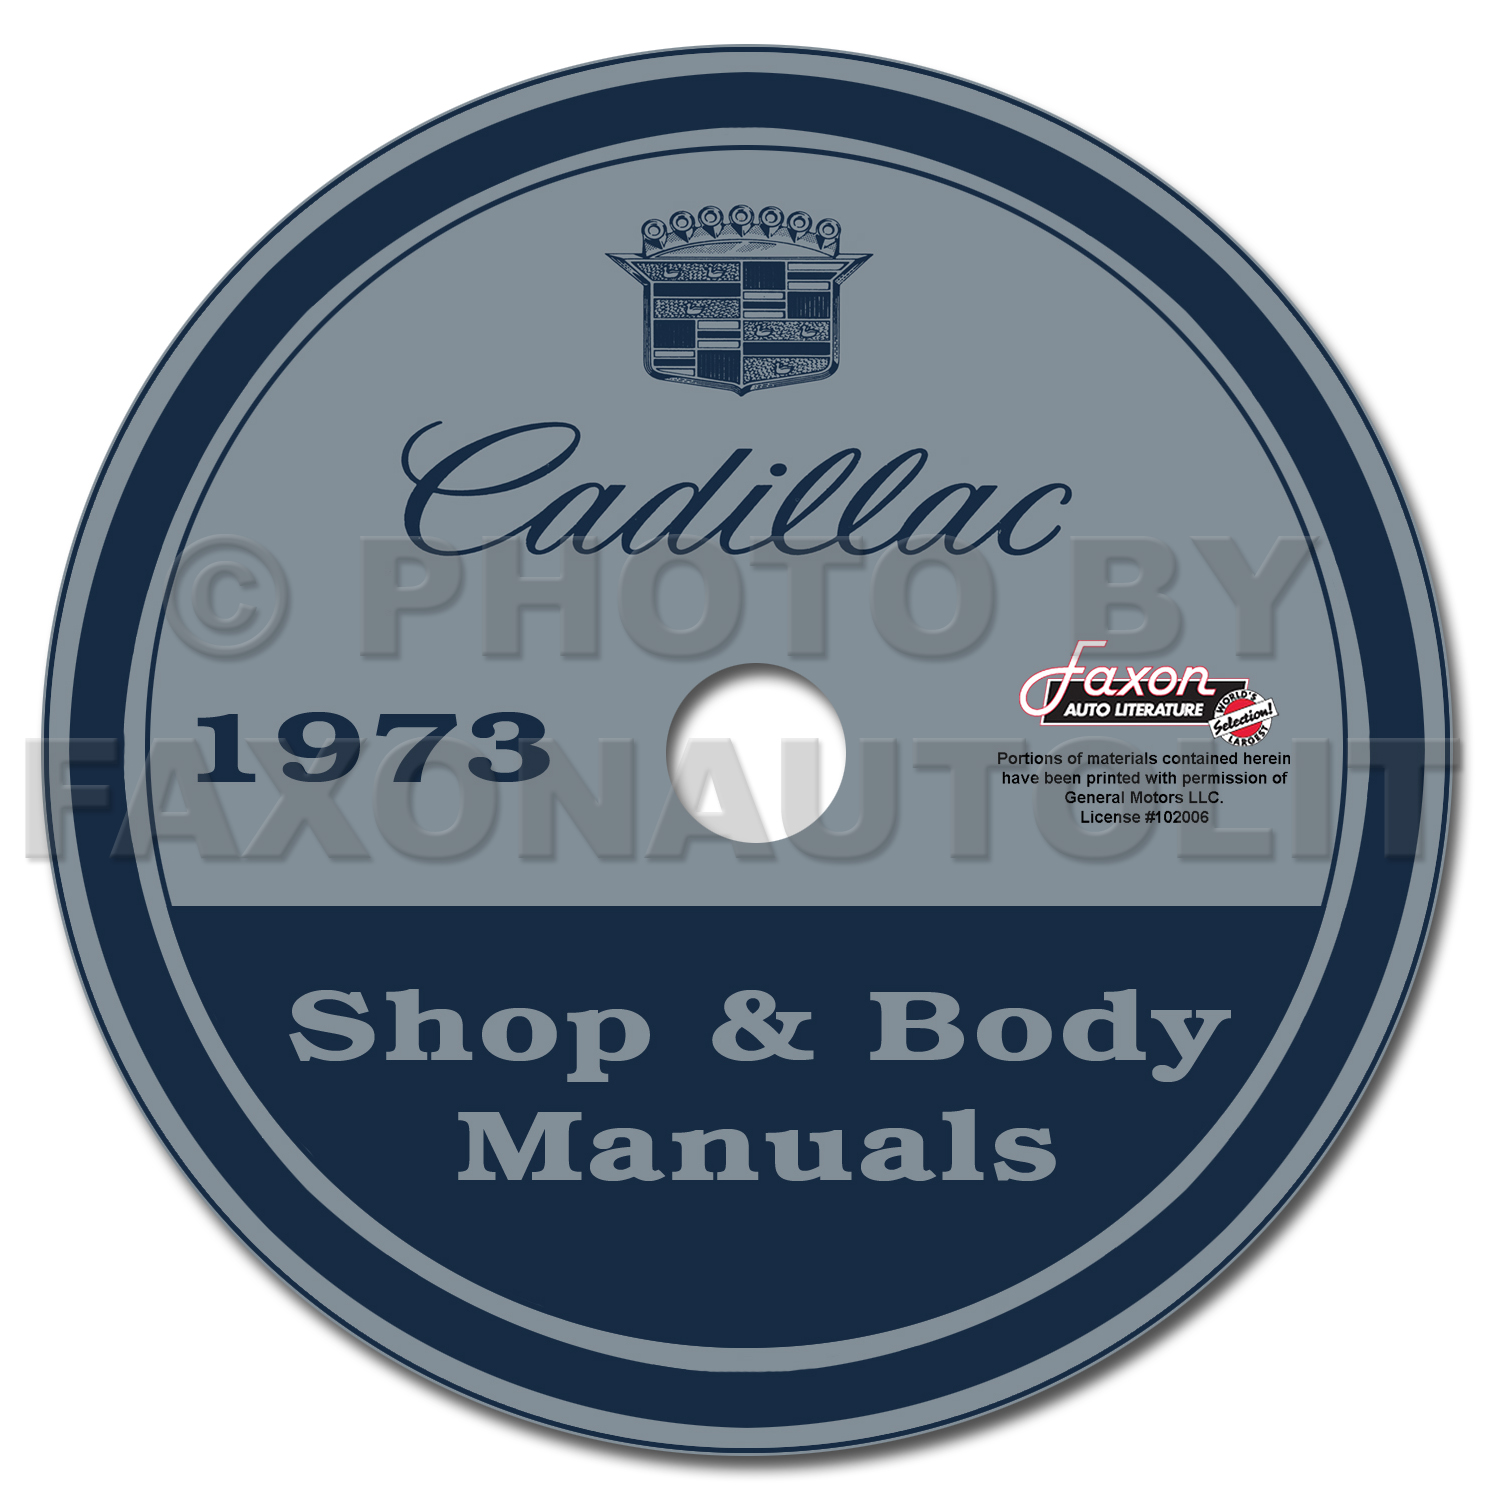 1973 Cadillac Shop Manual & Body Manual on CD-ROM